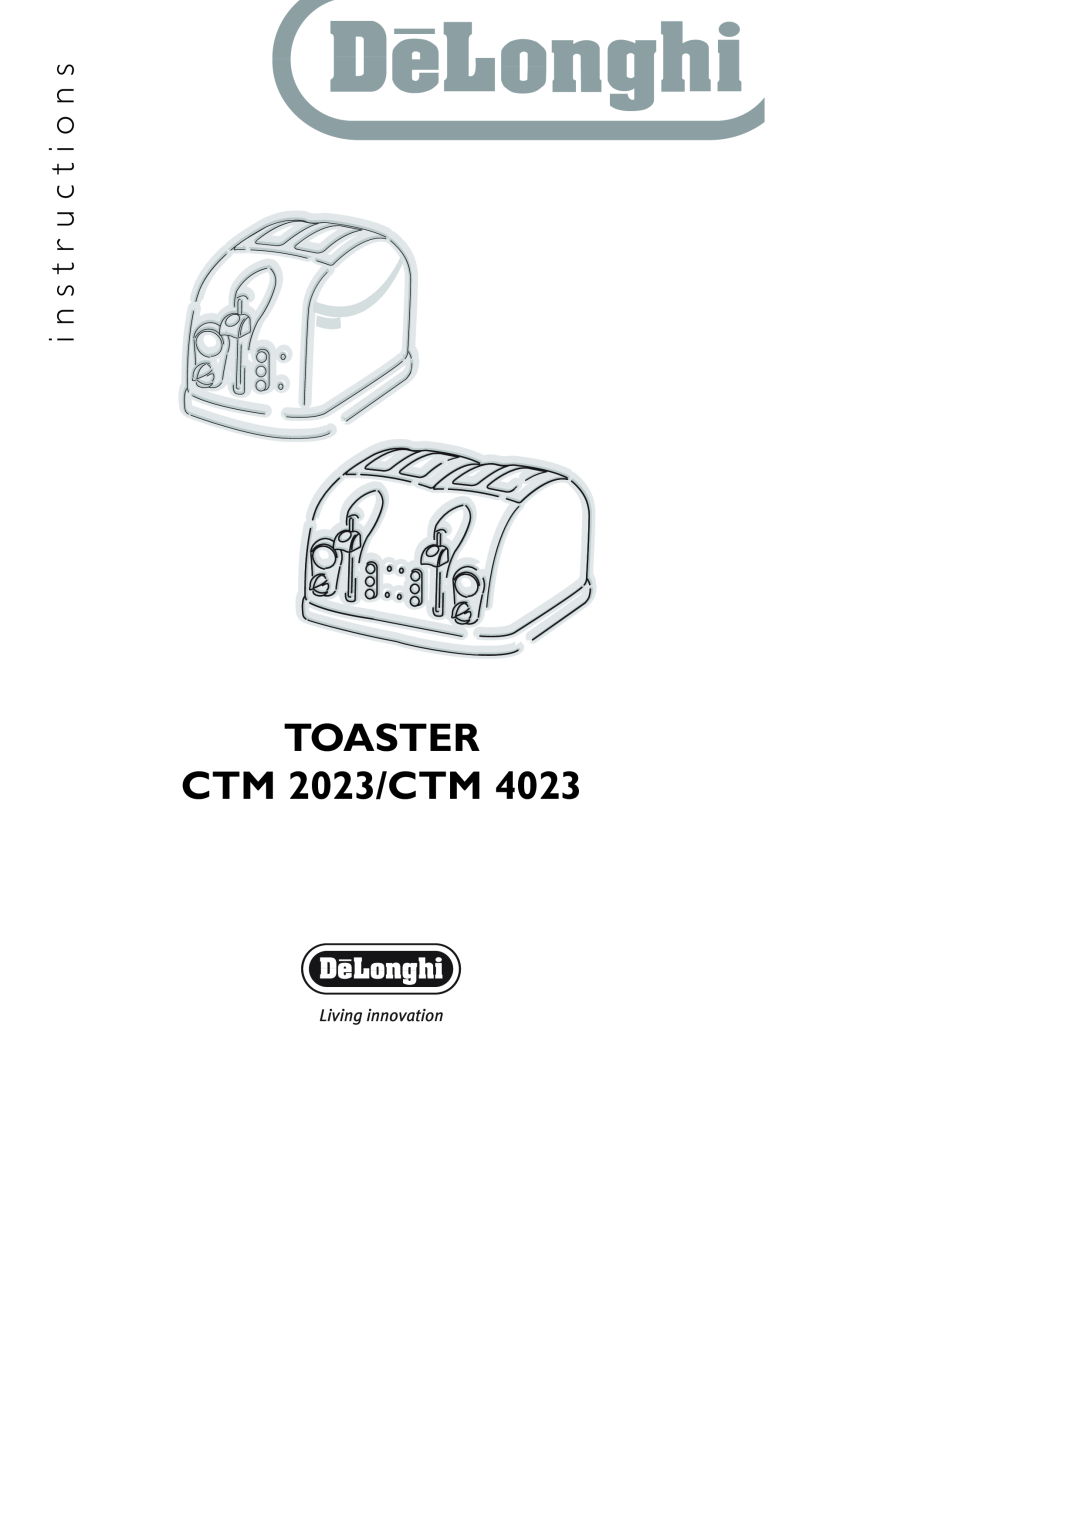 DeLonghi CTM 4023 manual CTM 2023/CTM, Toaster, i n s t r u c t i o n s 